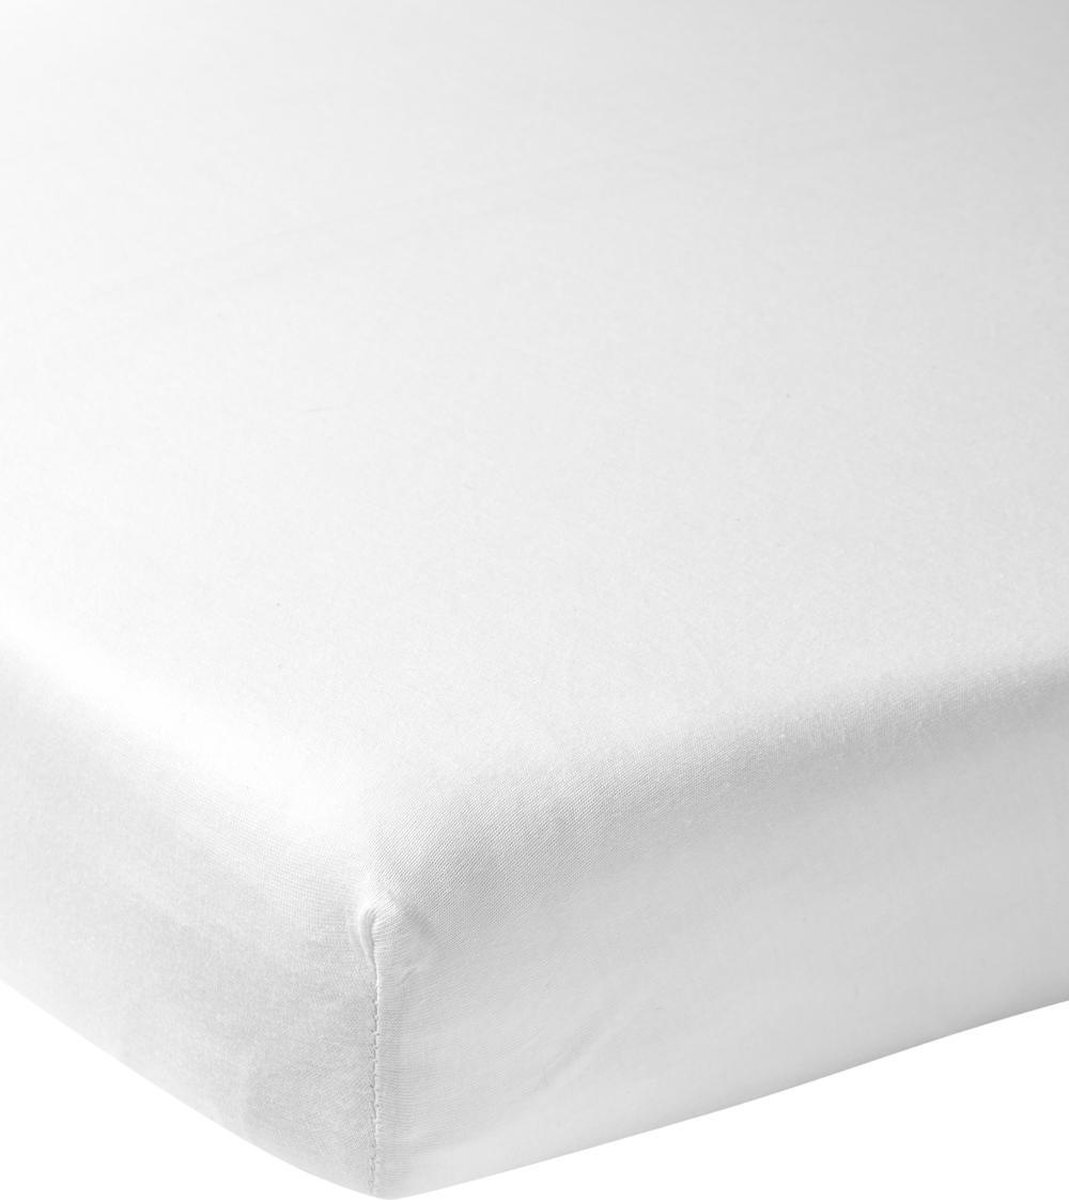 Meyco Home Uni hoeslaken twijfelaar - white - 120x200cm